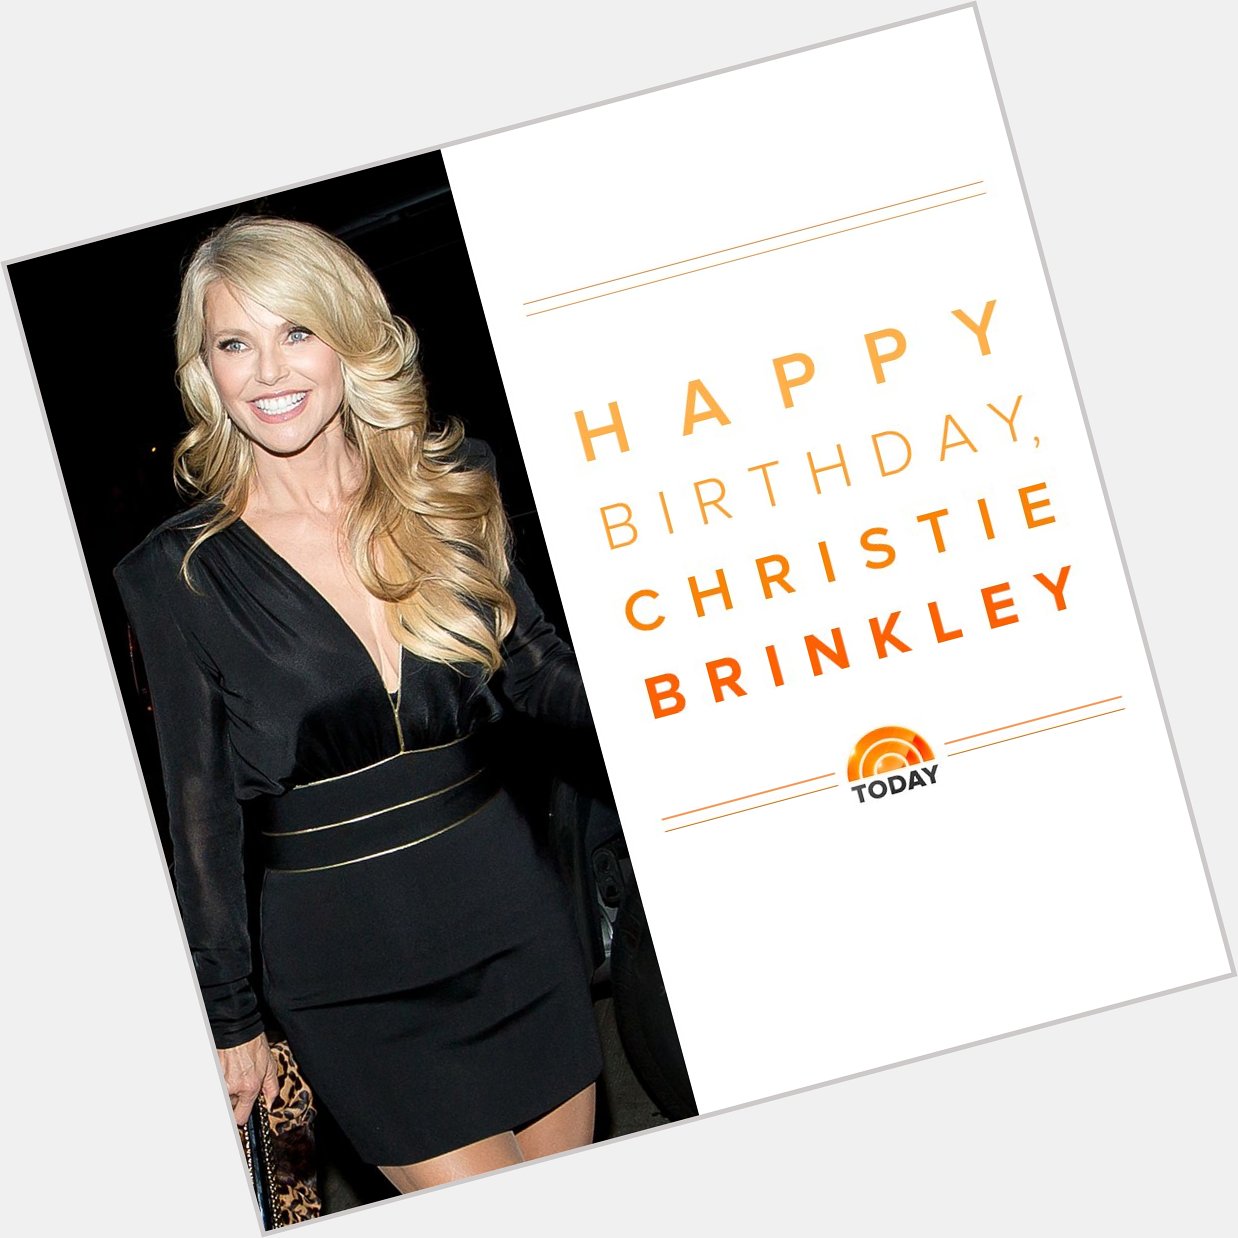 Happy birthday to the beautiful Christie Brinkley! 